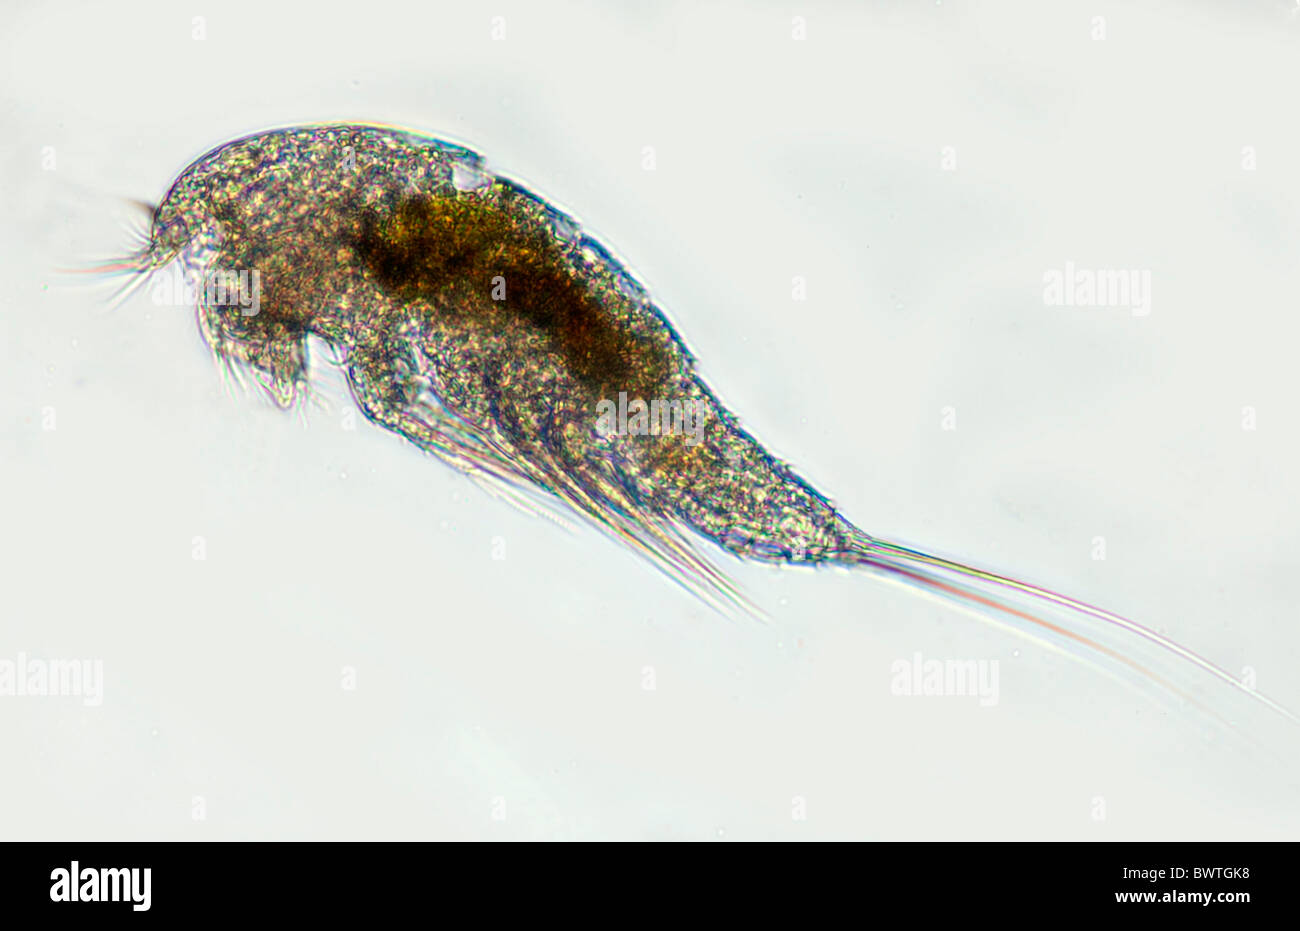 Marine Crustacean microscopic Stock Photo